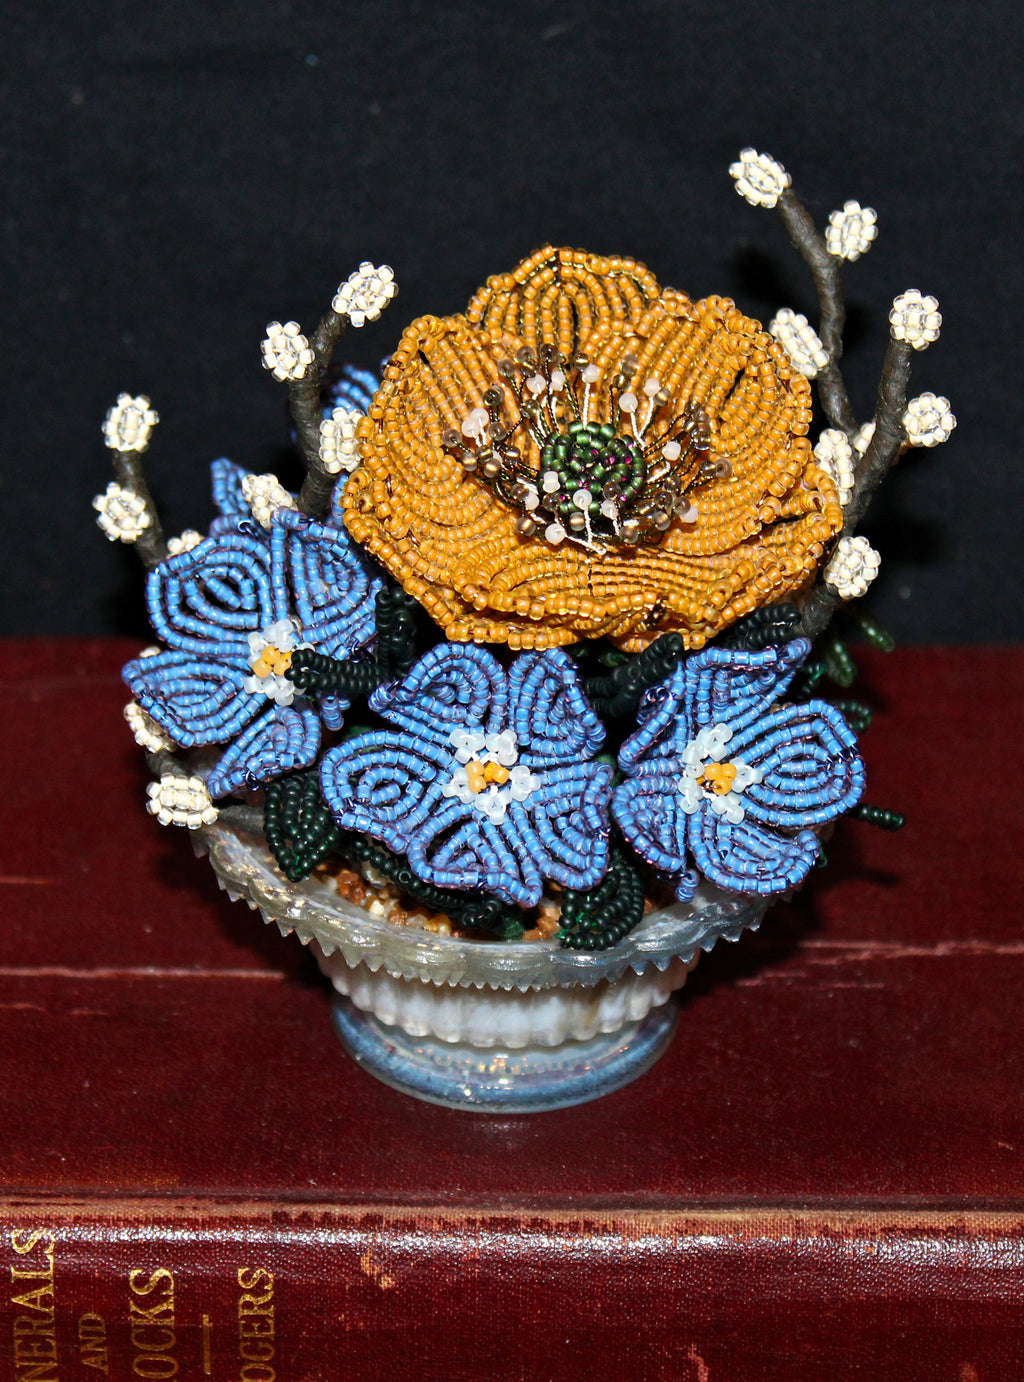 Golden Poppy and Blue Periwinkle Mini Arrangement - SOLD